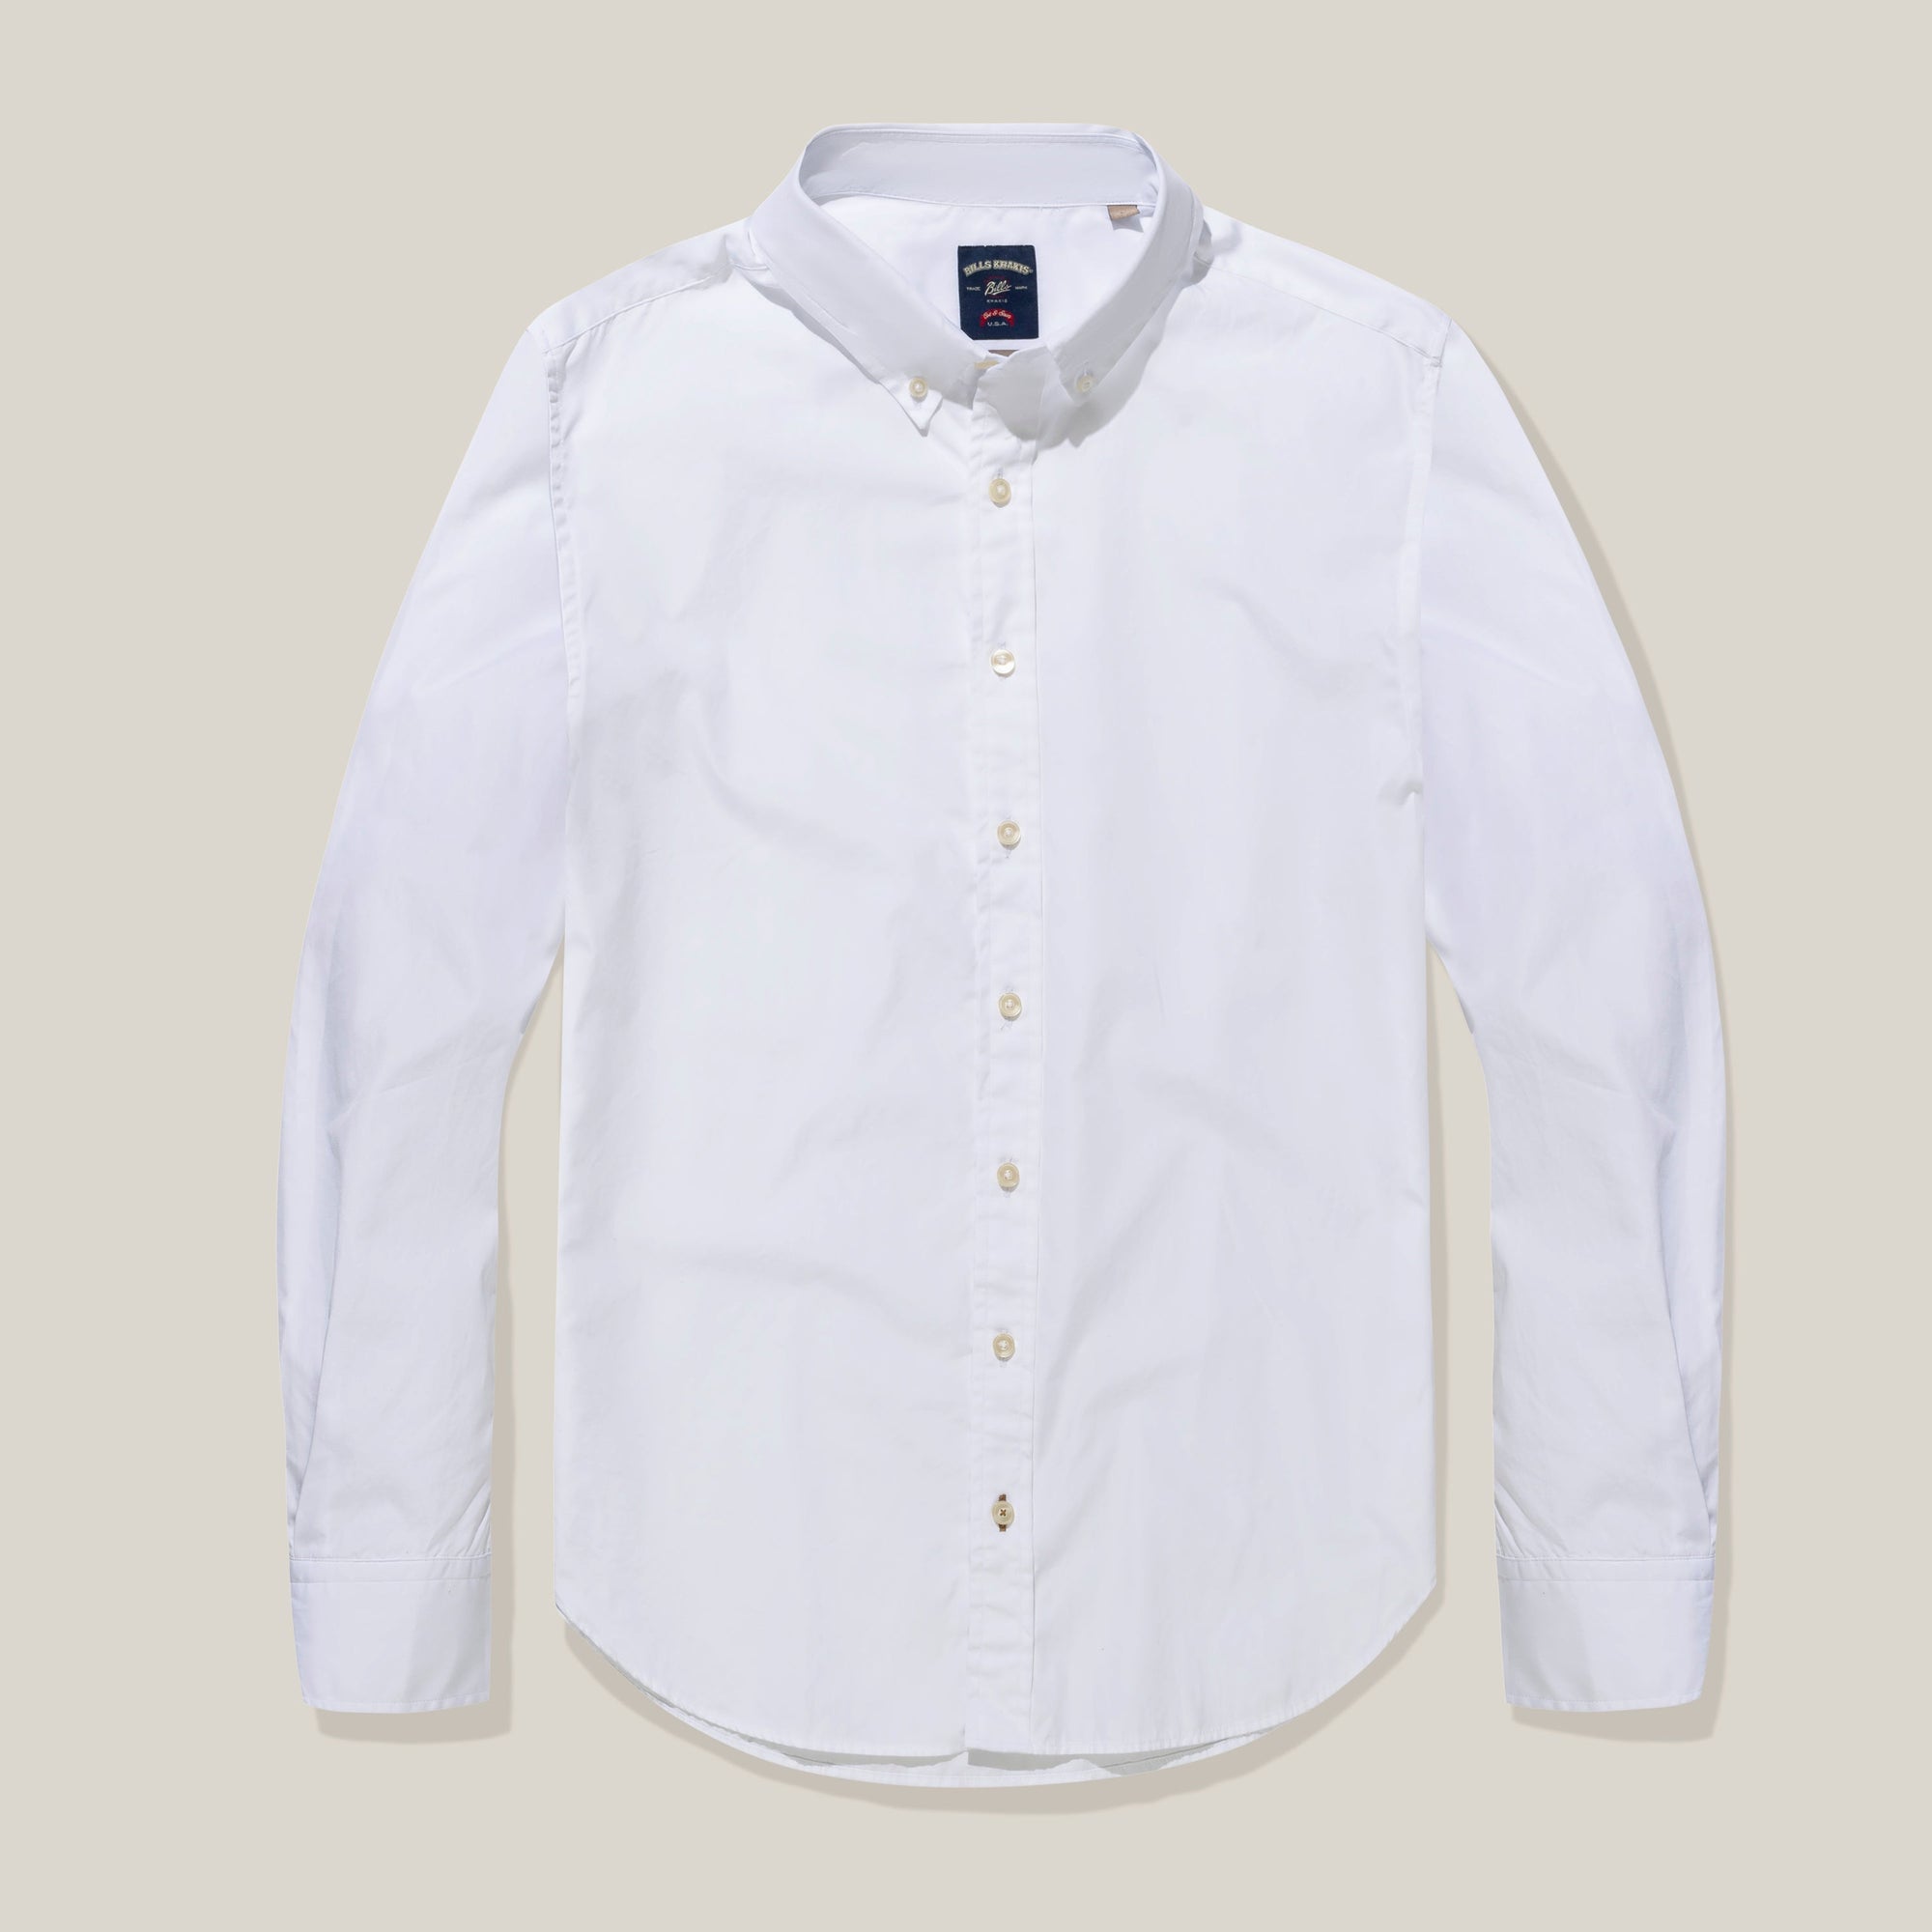 Weekender Fit 2 Ply Poplin Sport Shirt in White by Bills Khakis